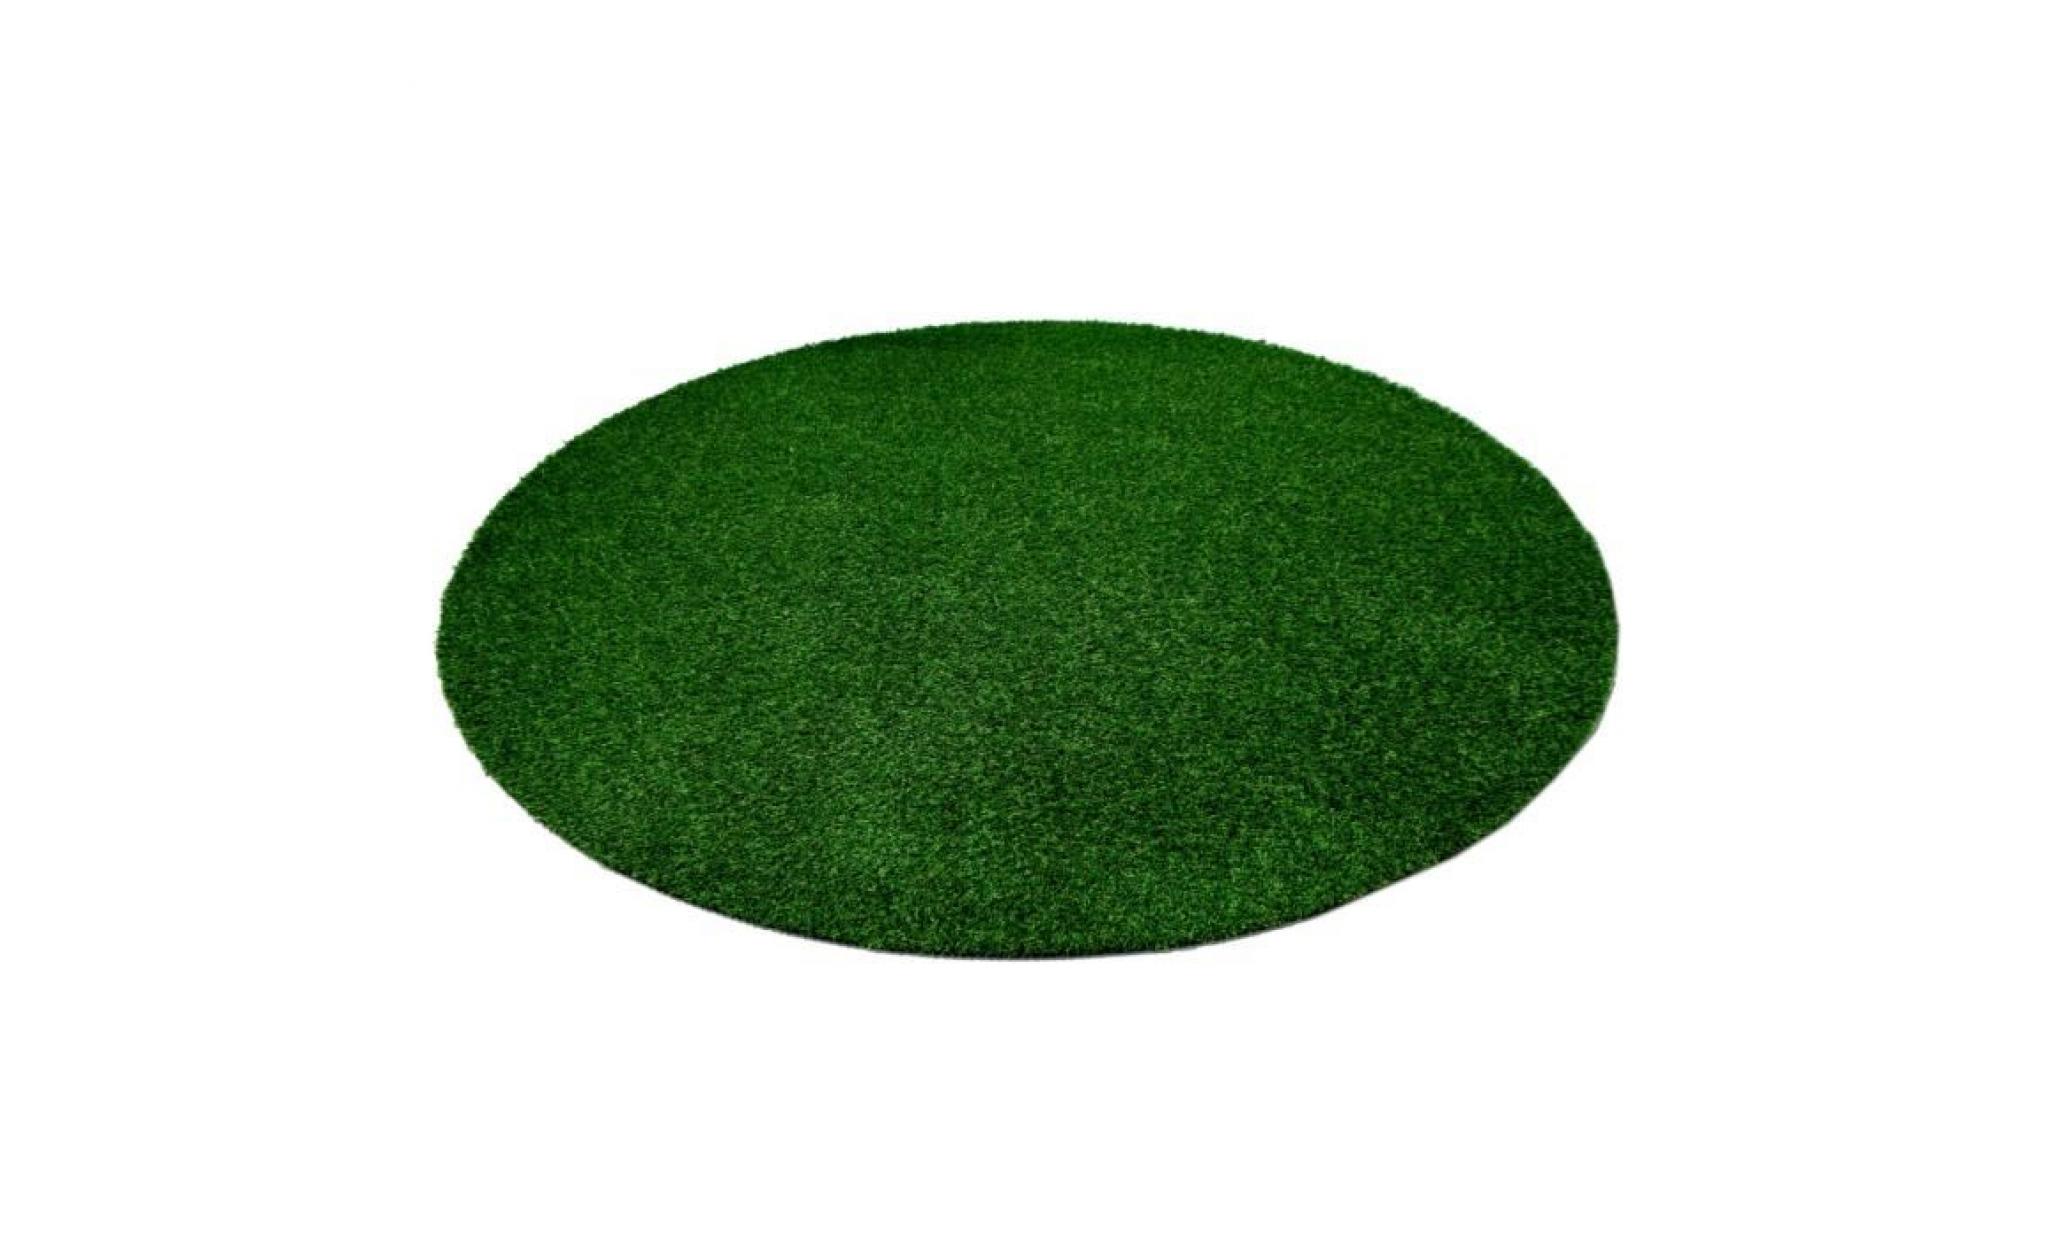 chelsea   tapis type luxe gazon artificiel rond – pour jardin, terrasse, balcon   vert   [100 cm rond]